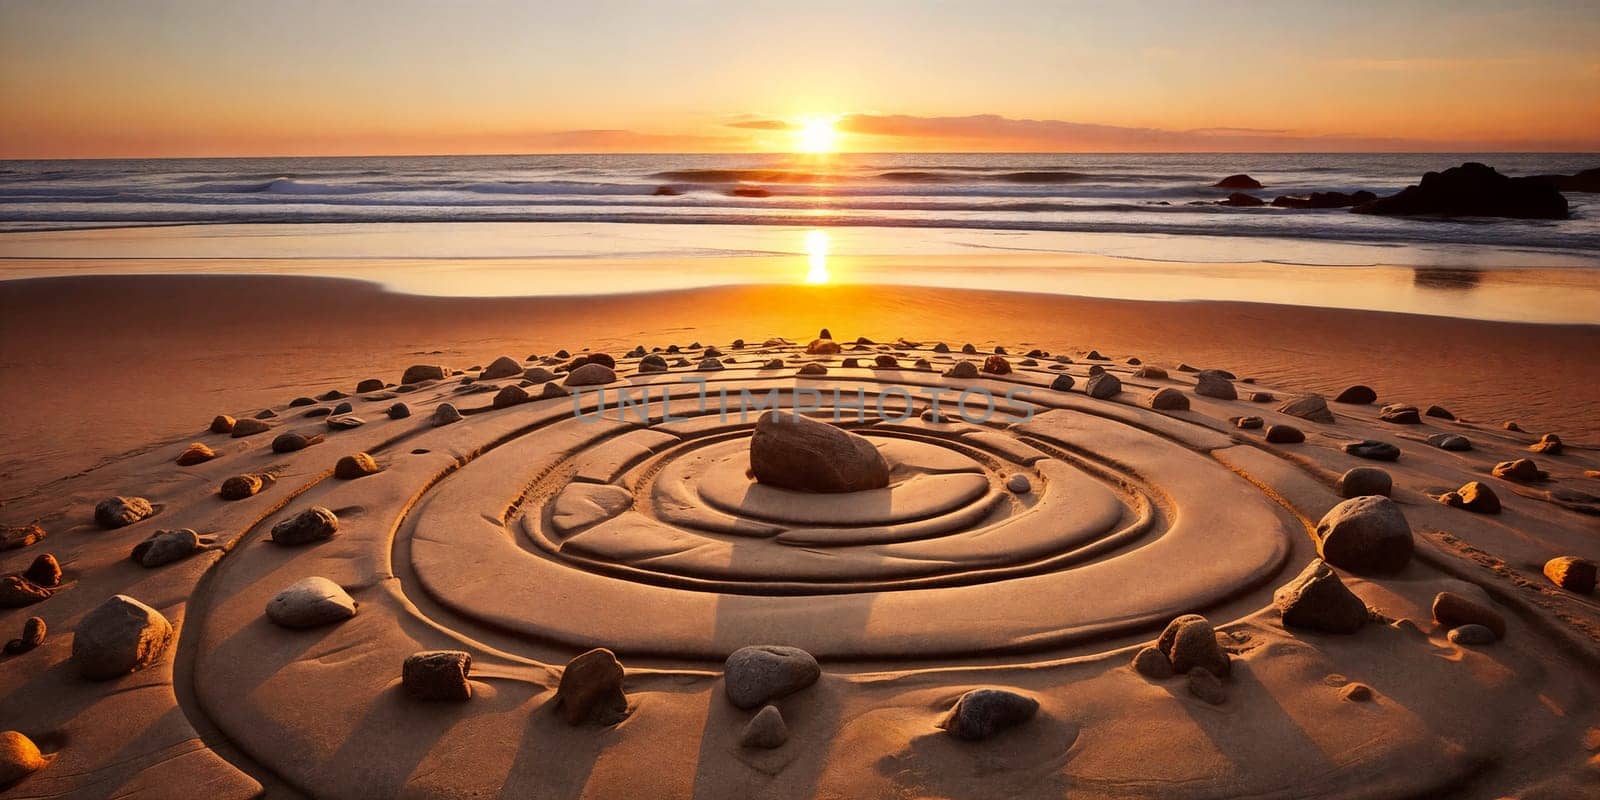 Pattern of stones on a sandy beach by GoodOlga